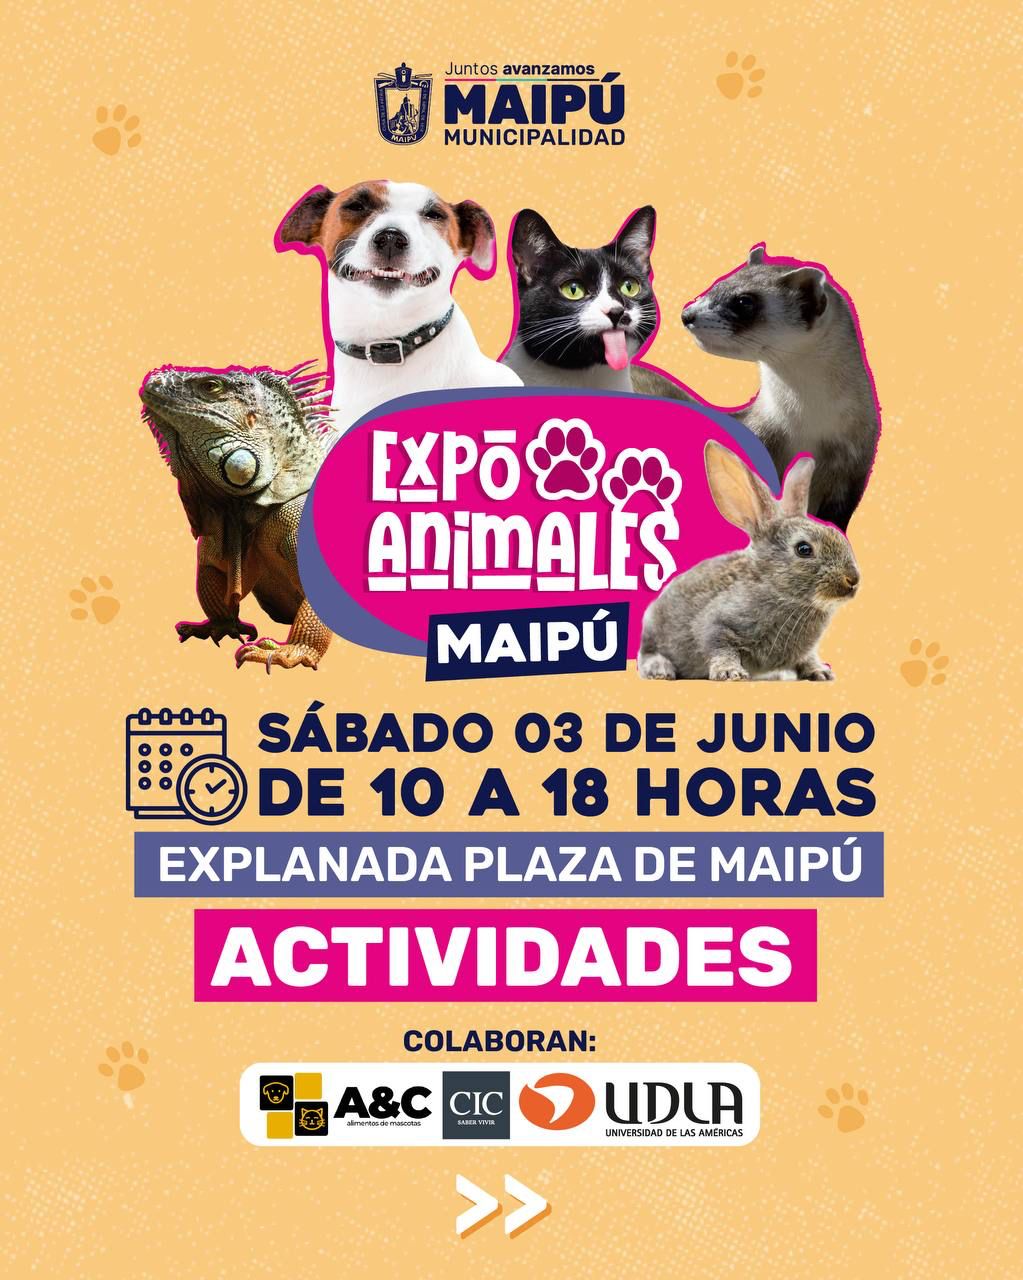 Expo Animales Maipú / Potección Animal Maipú